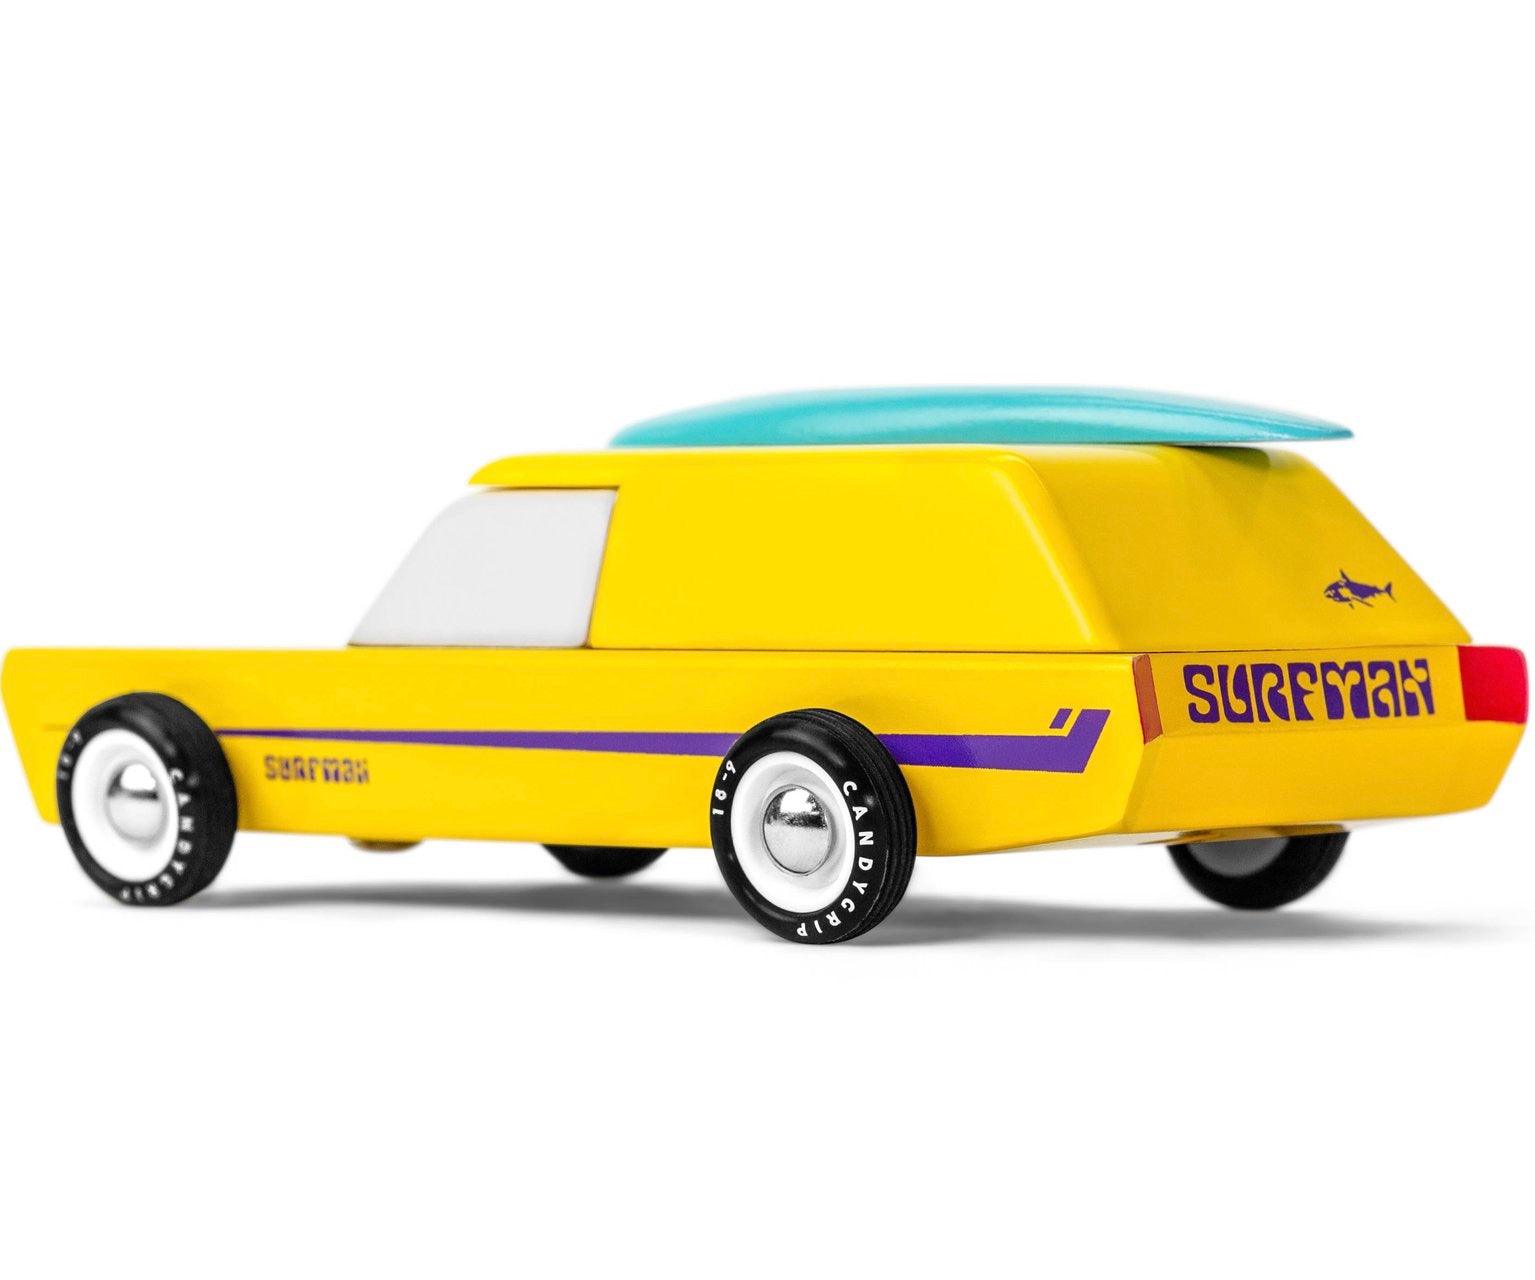 Candylab Toys: drewniany samochód Americana Surfman - Noski Noski